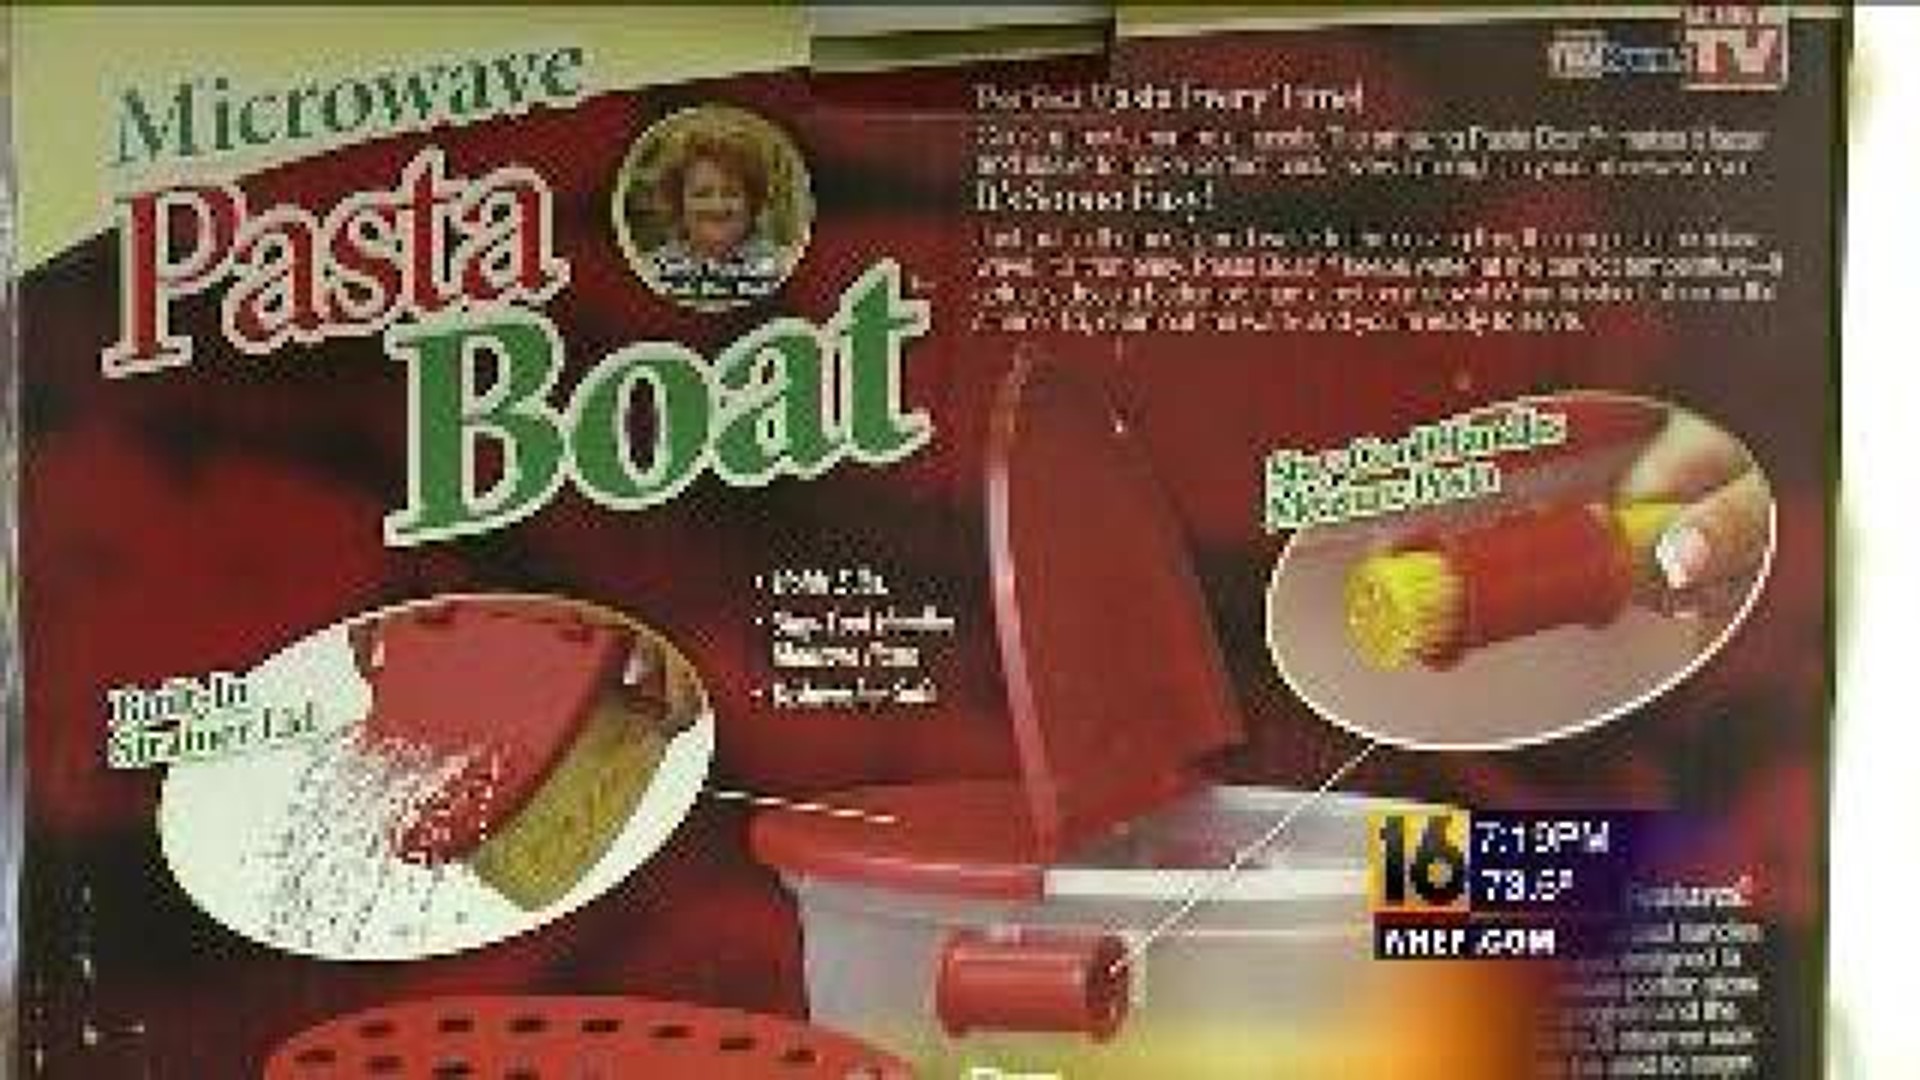 Pasta Boat